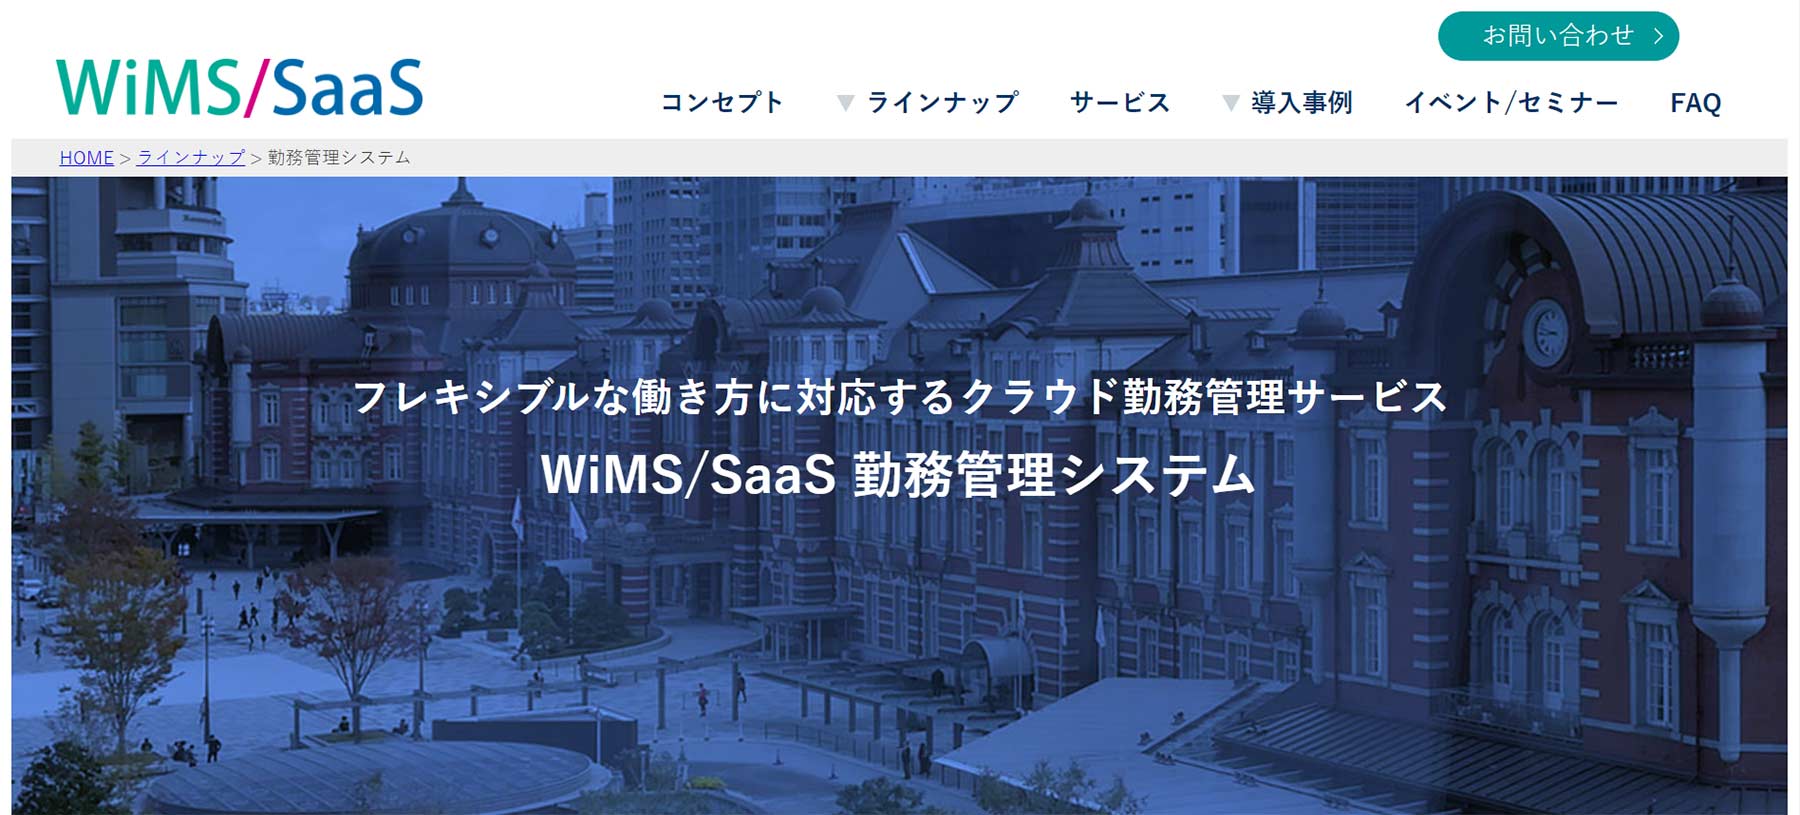 WiMS/SaaS 勤務管理システム公式Webサイト